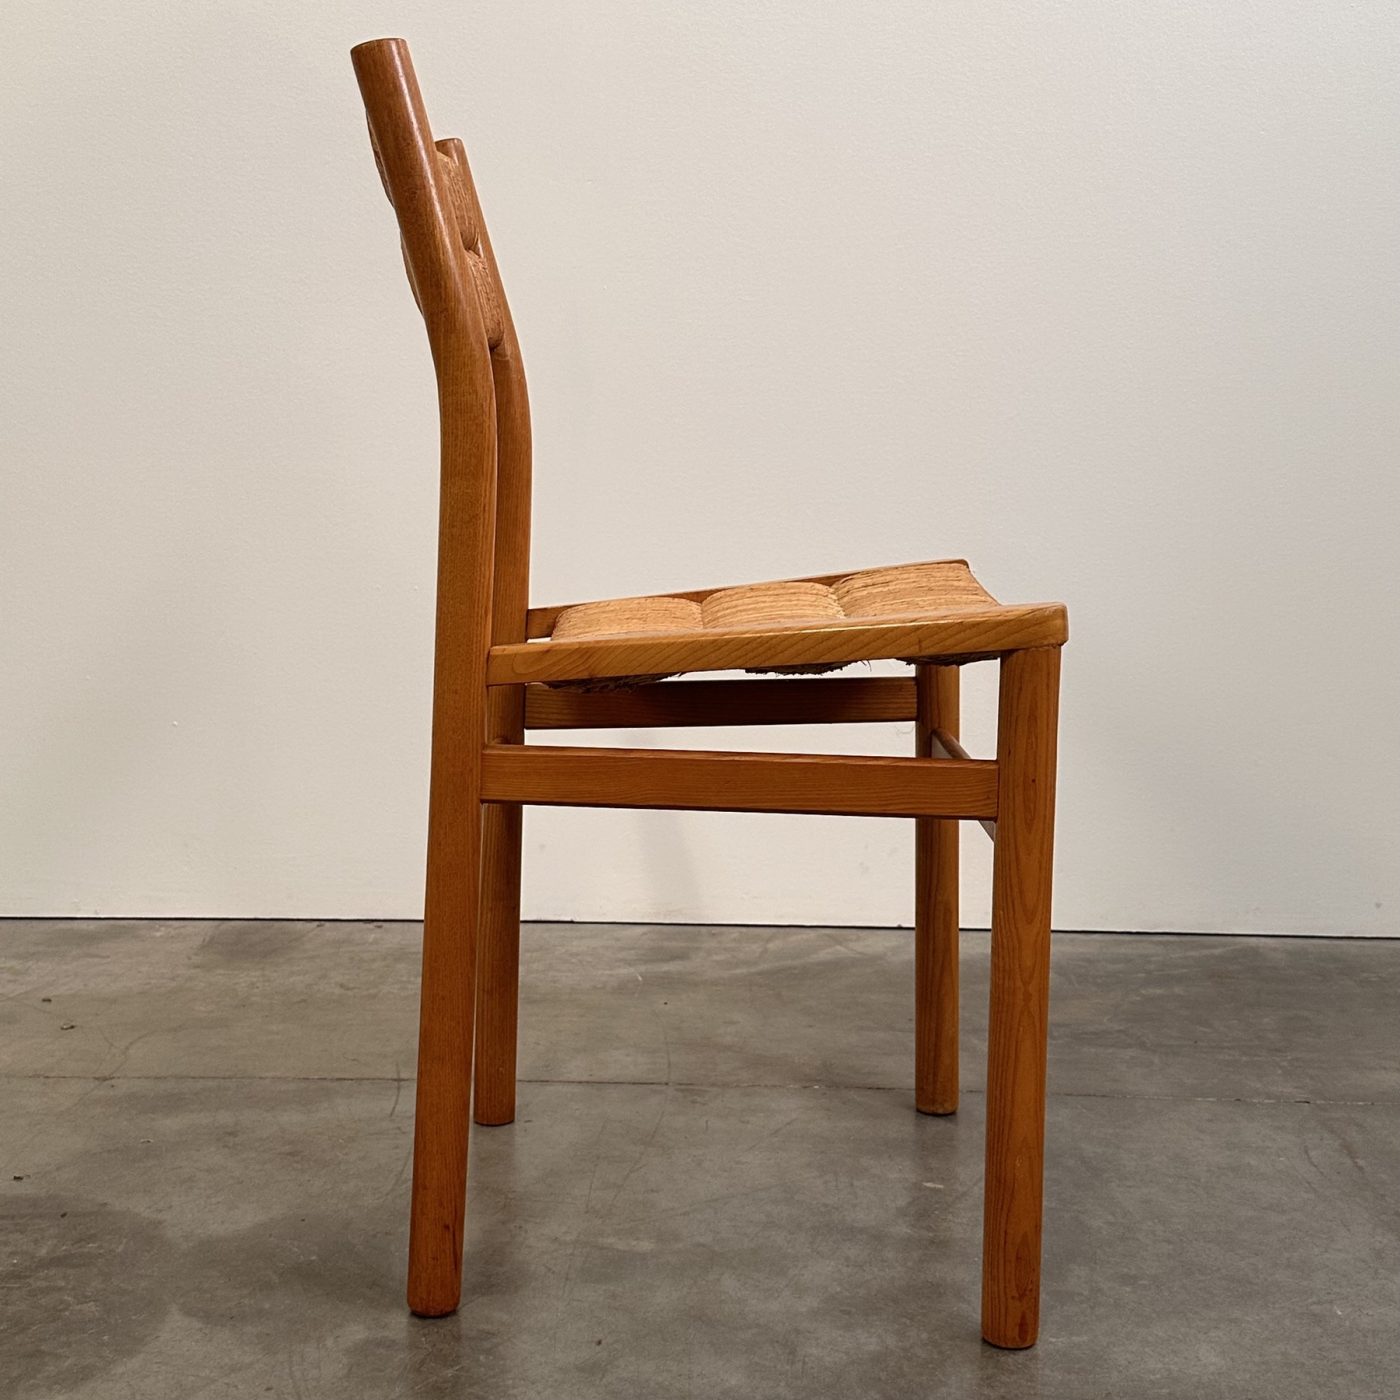 objet-vagabond-delaye-chairs0001